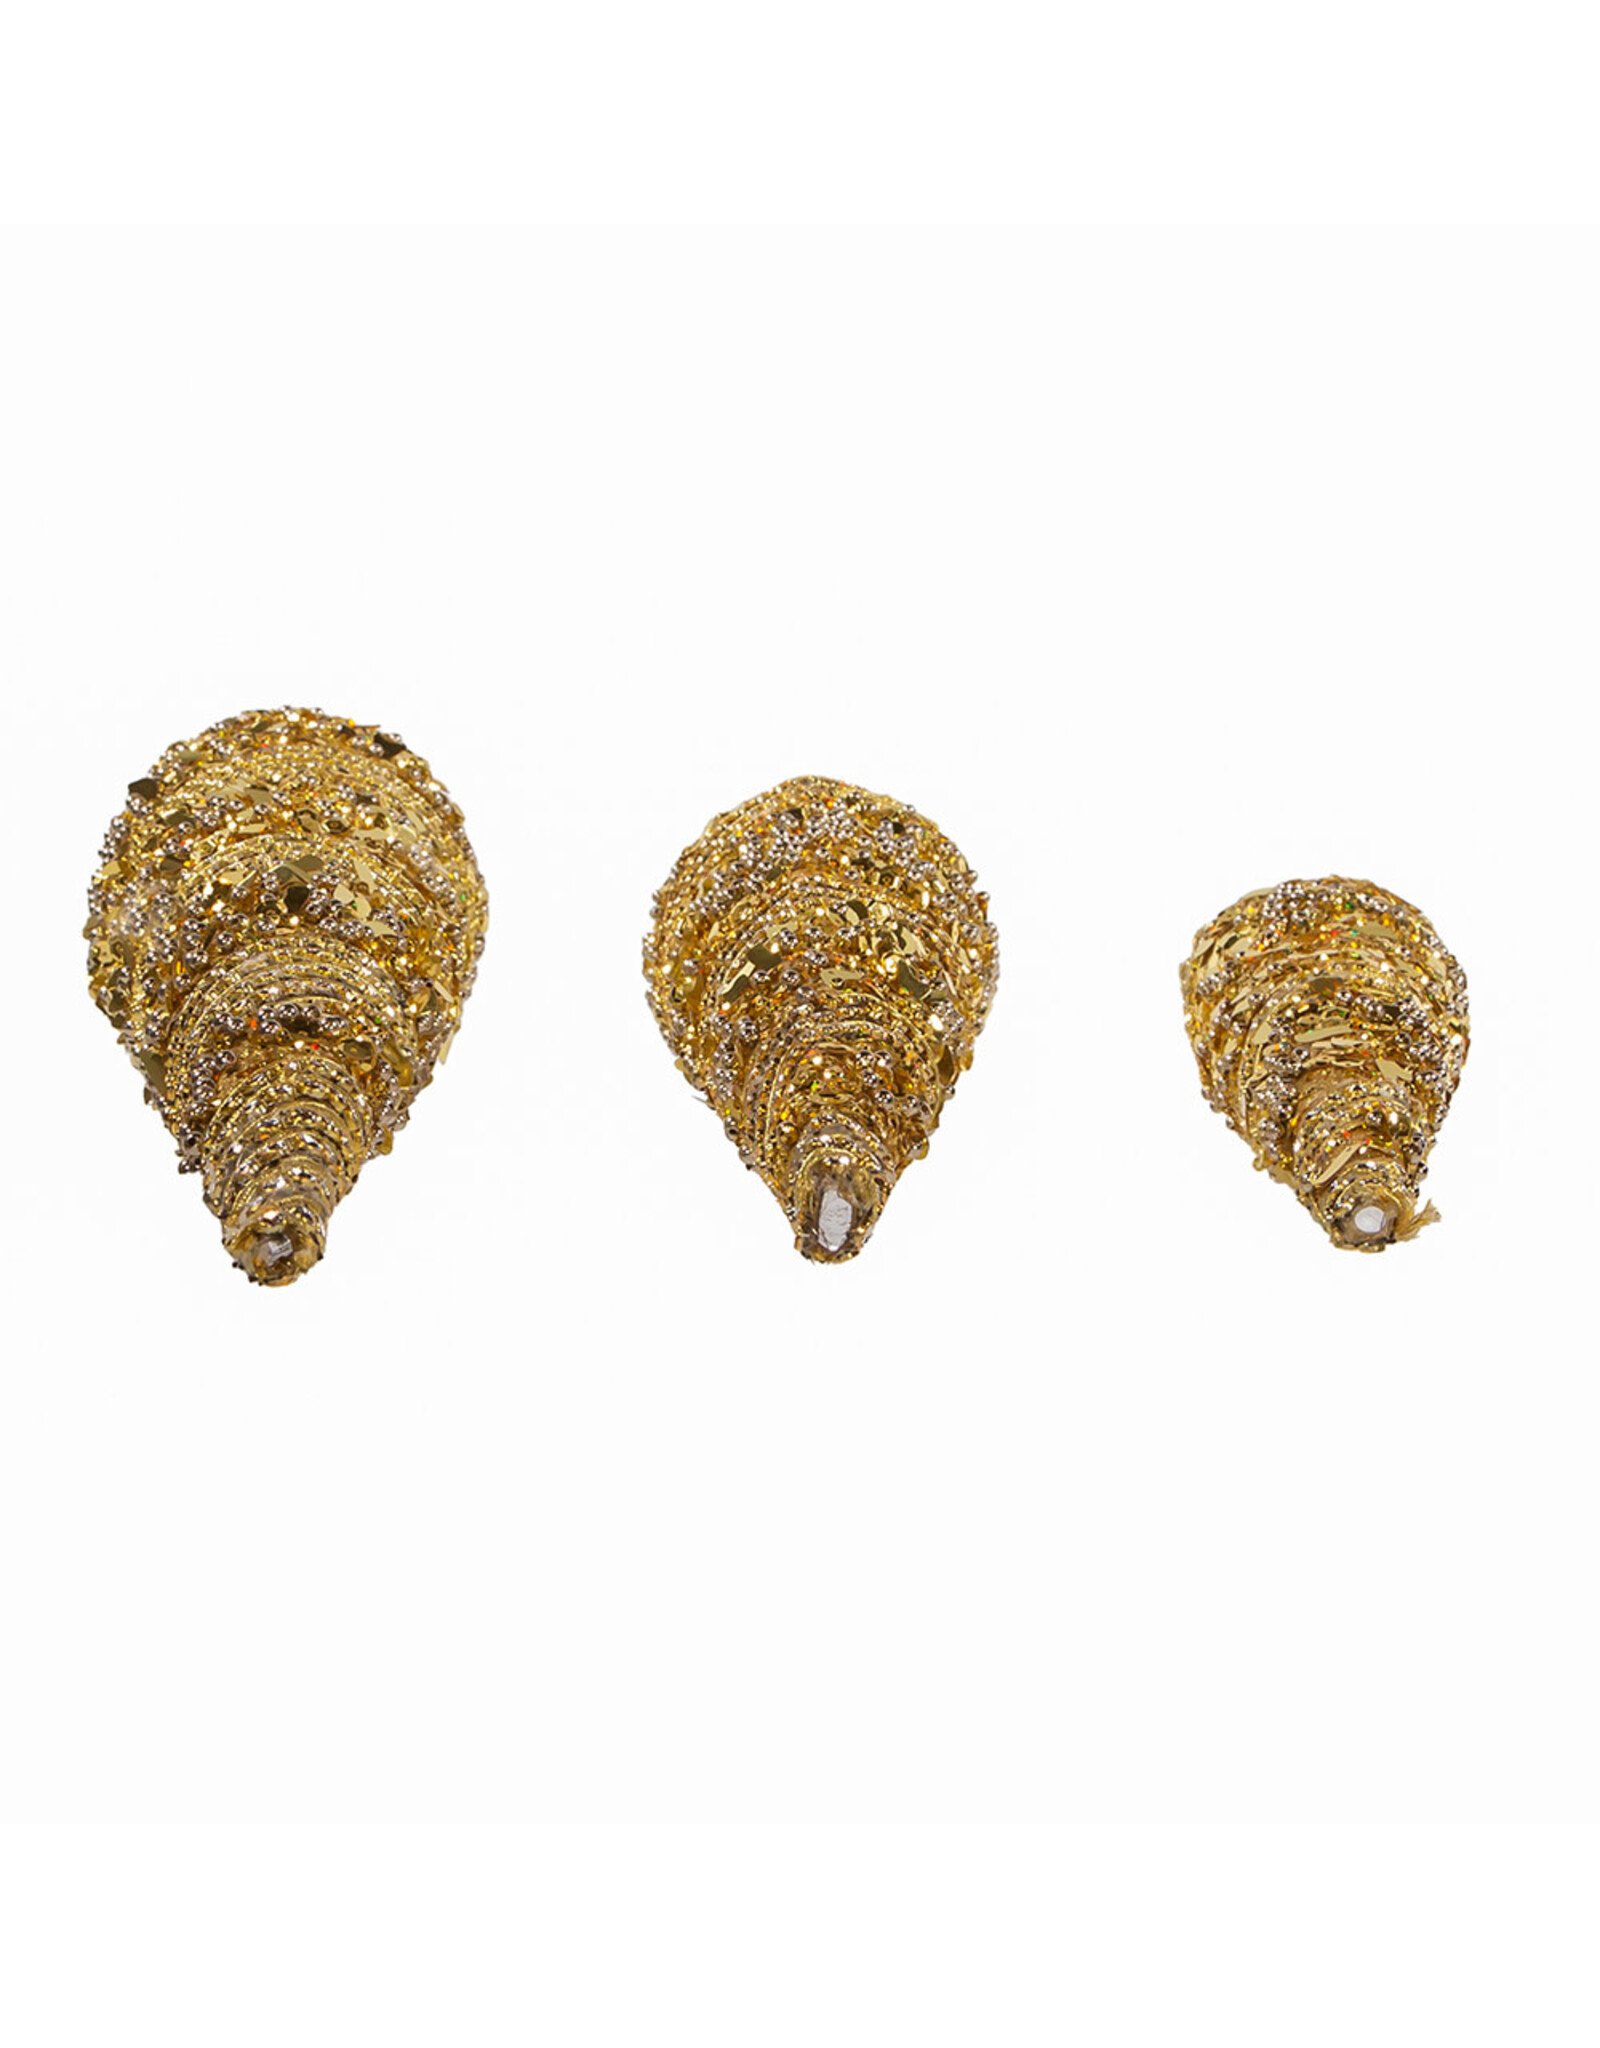 Kurt Adler Gold Cone Trees Glittered And Jeweled 3pc Set 11-17 Inch